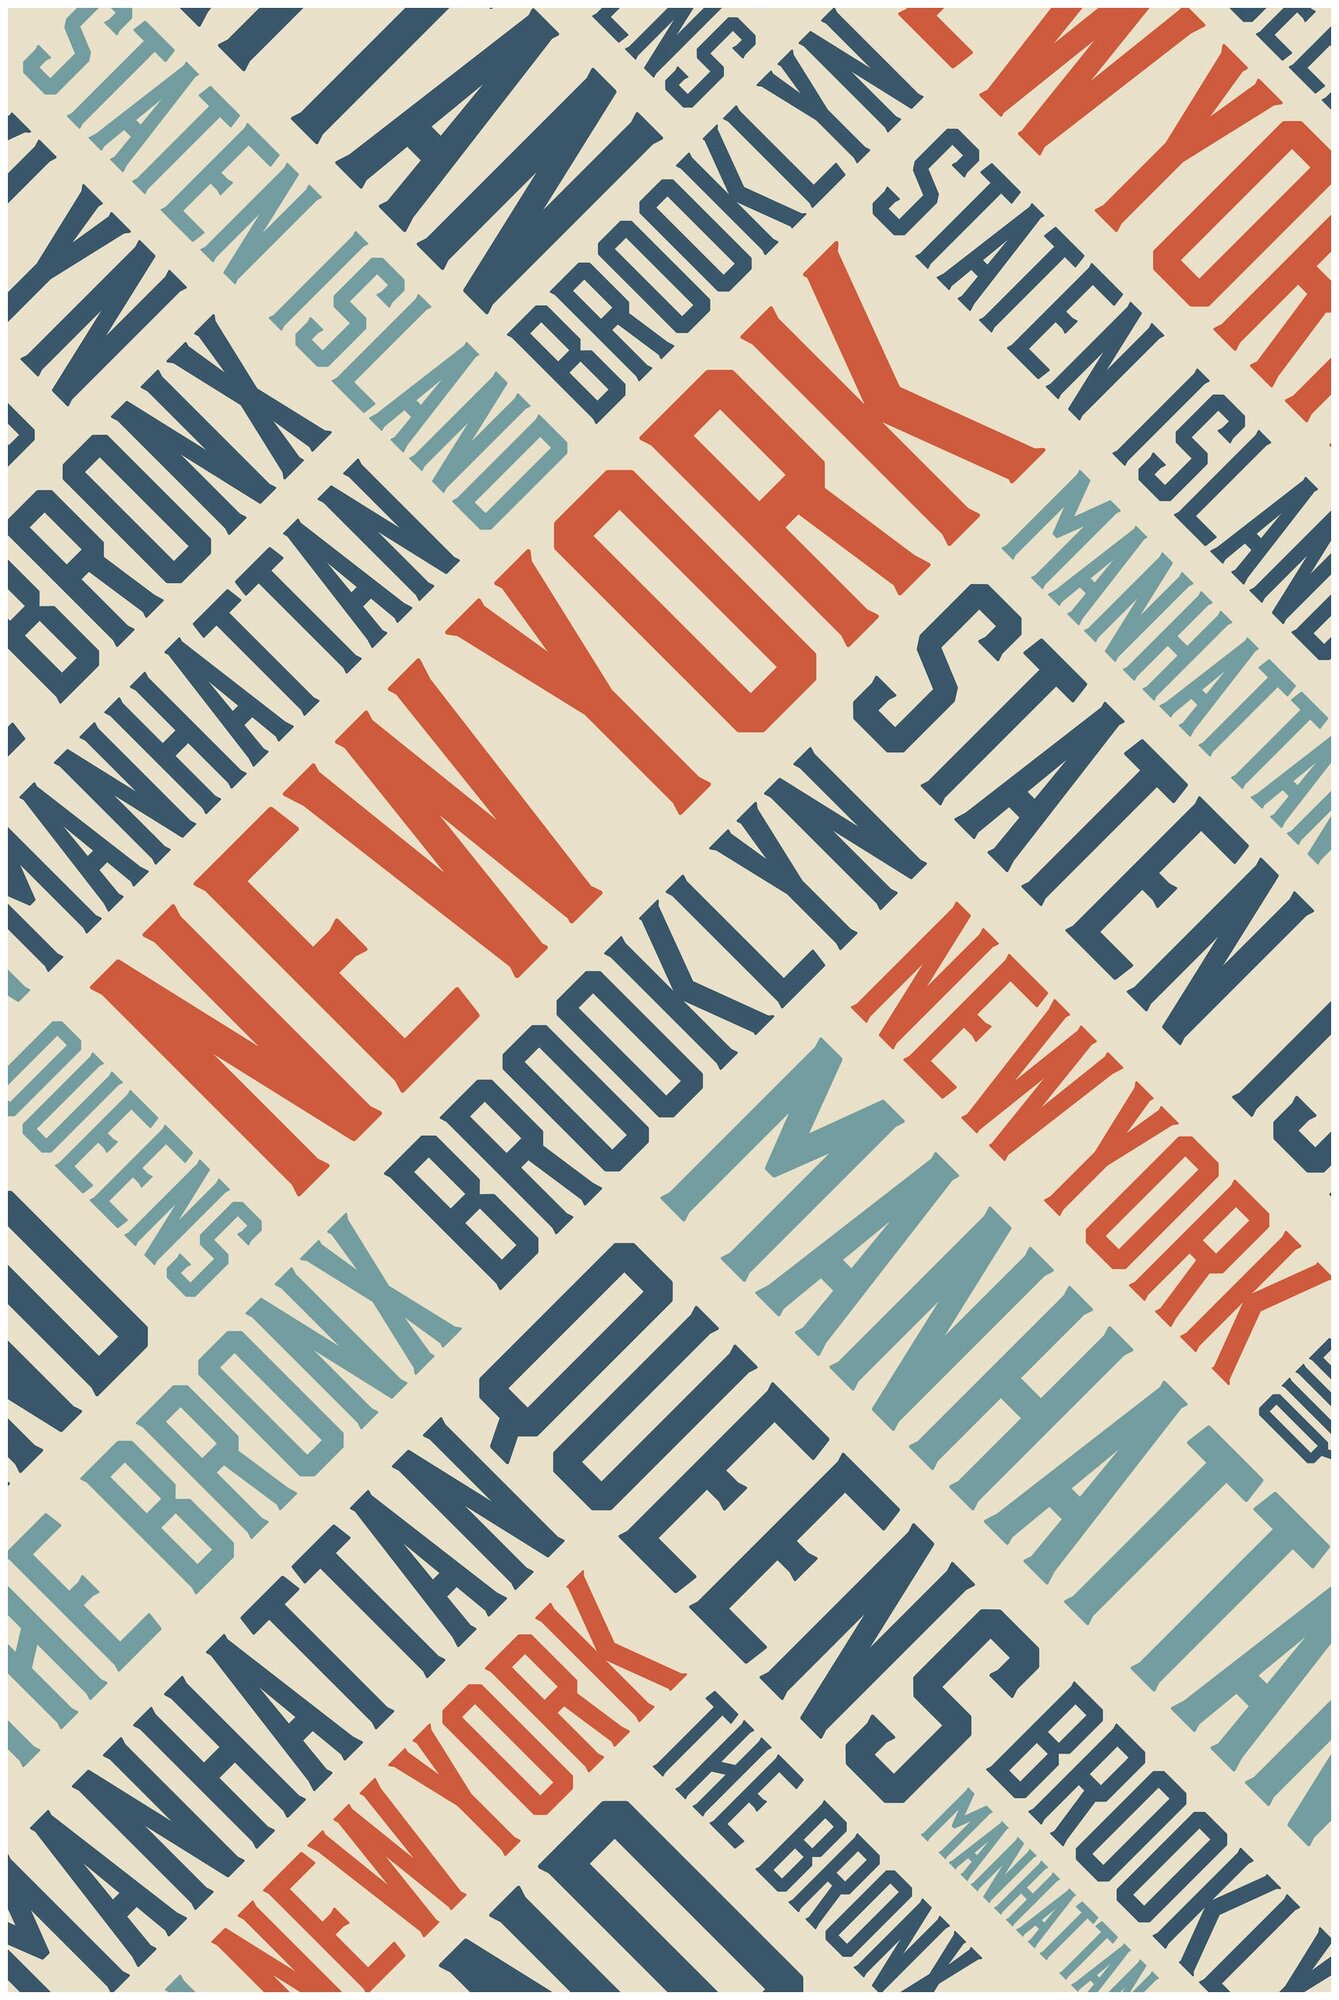 Постер / Плакат / Картина на холсте Районы Нью-Йорка